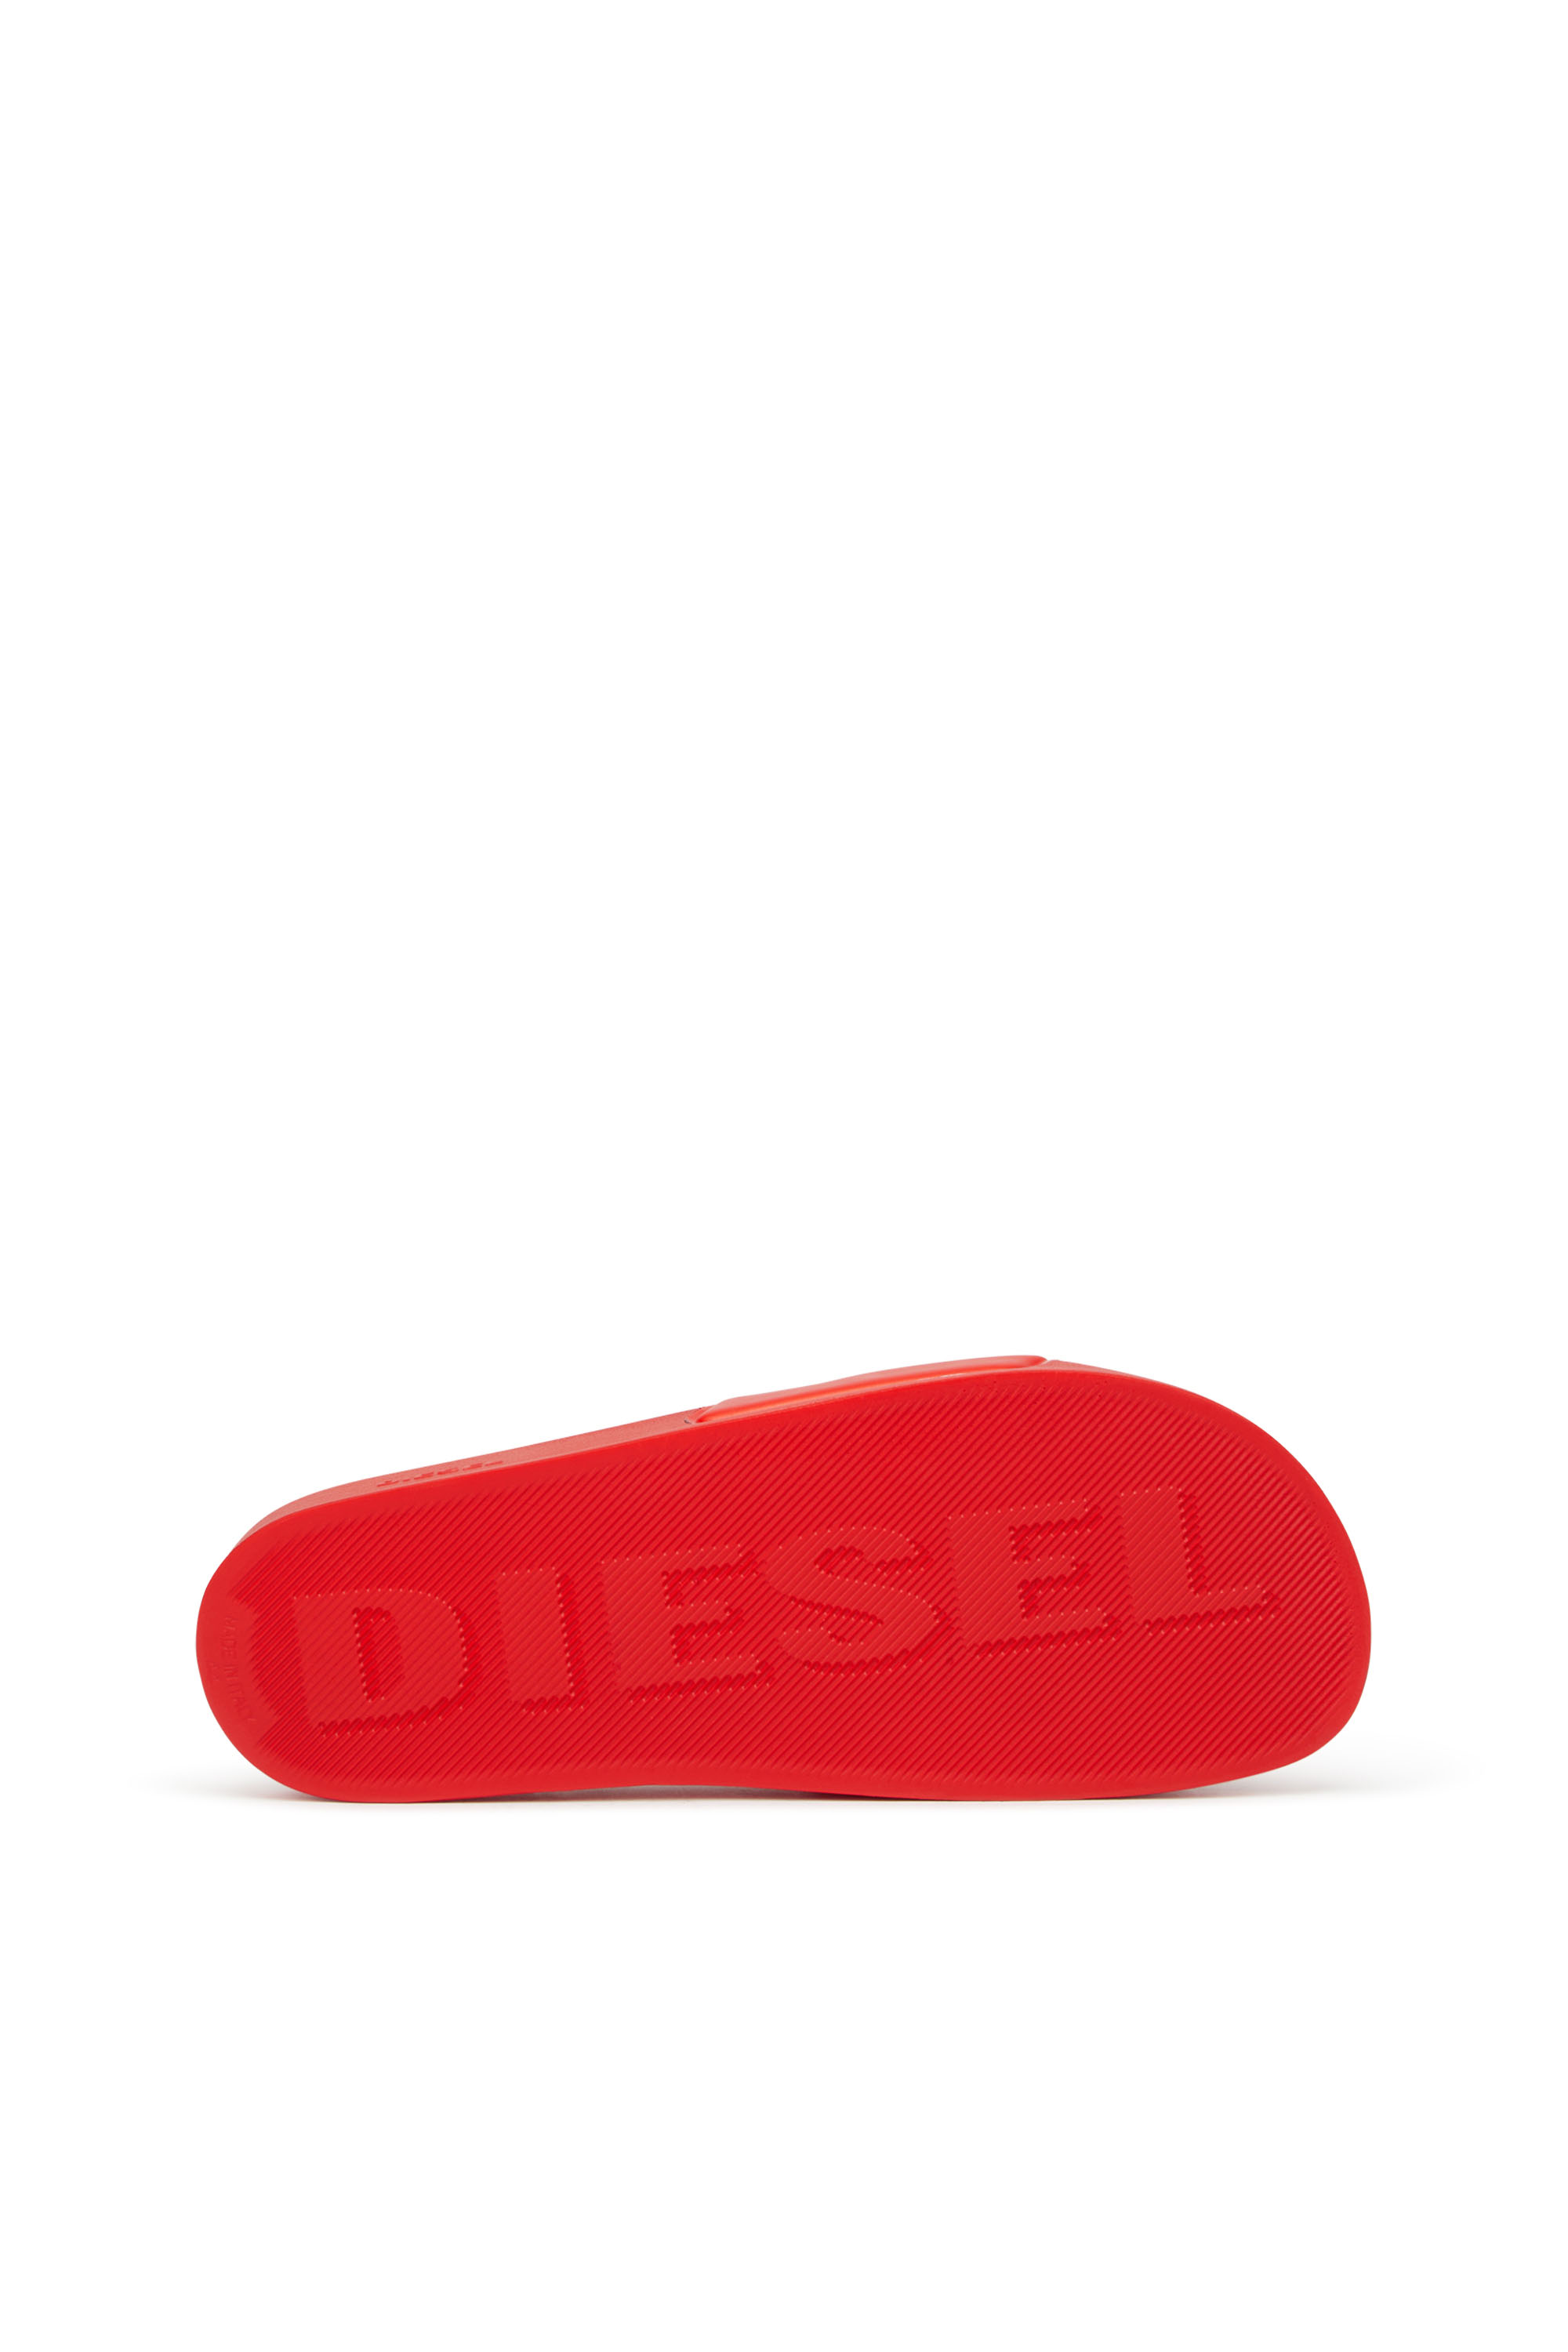 Diesel - SA-MAYEMI D, Red - Image 4